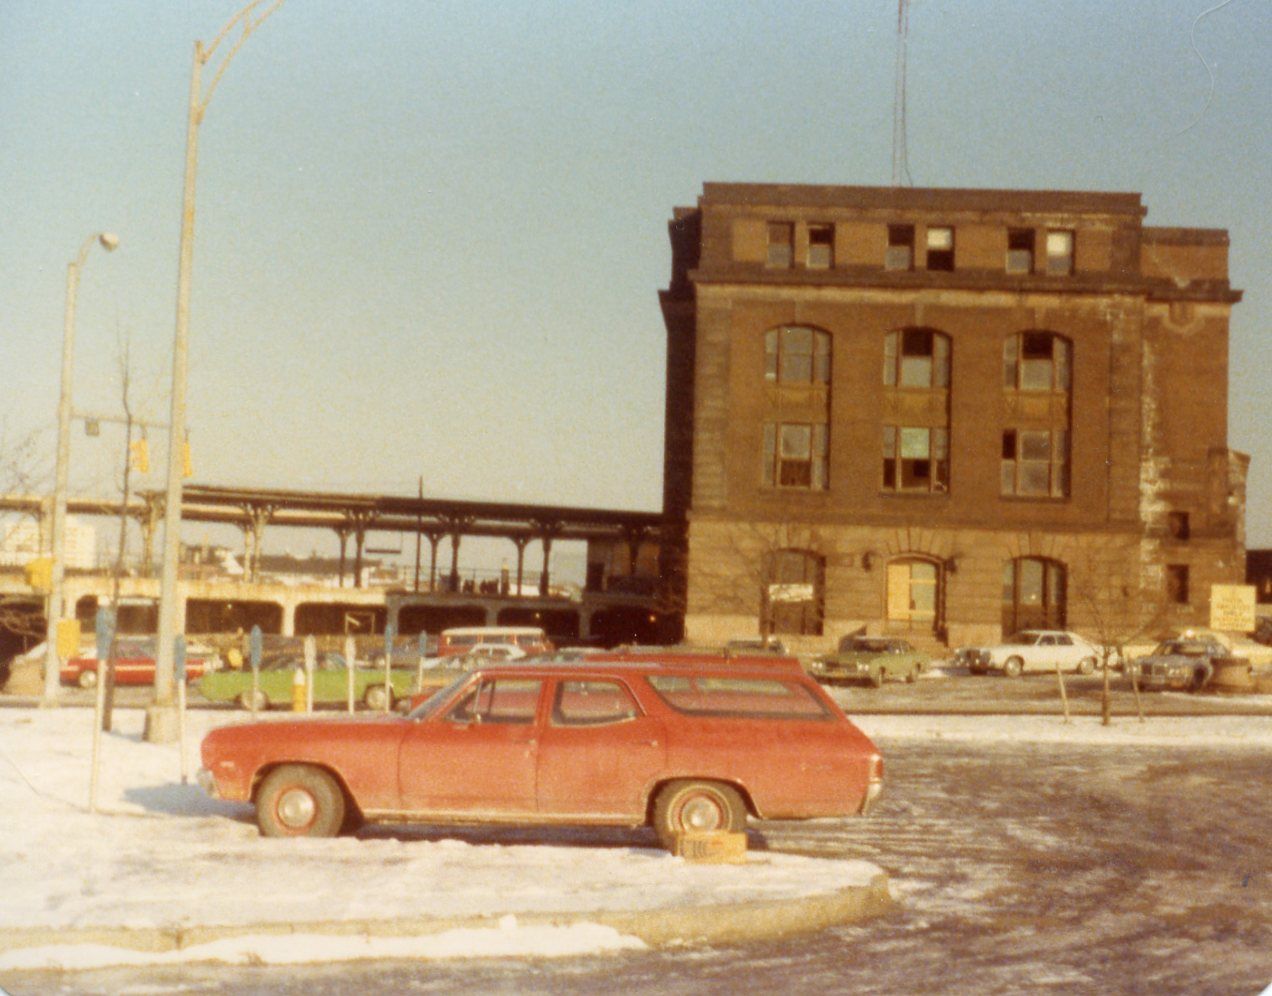 Rochester's NY Central (Bragdon) Station half demolished, c.1970? [PHOTO VIA: Christopher Playford]